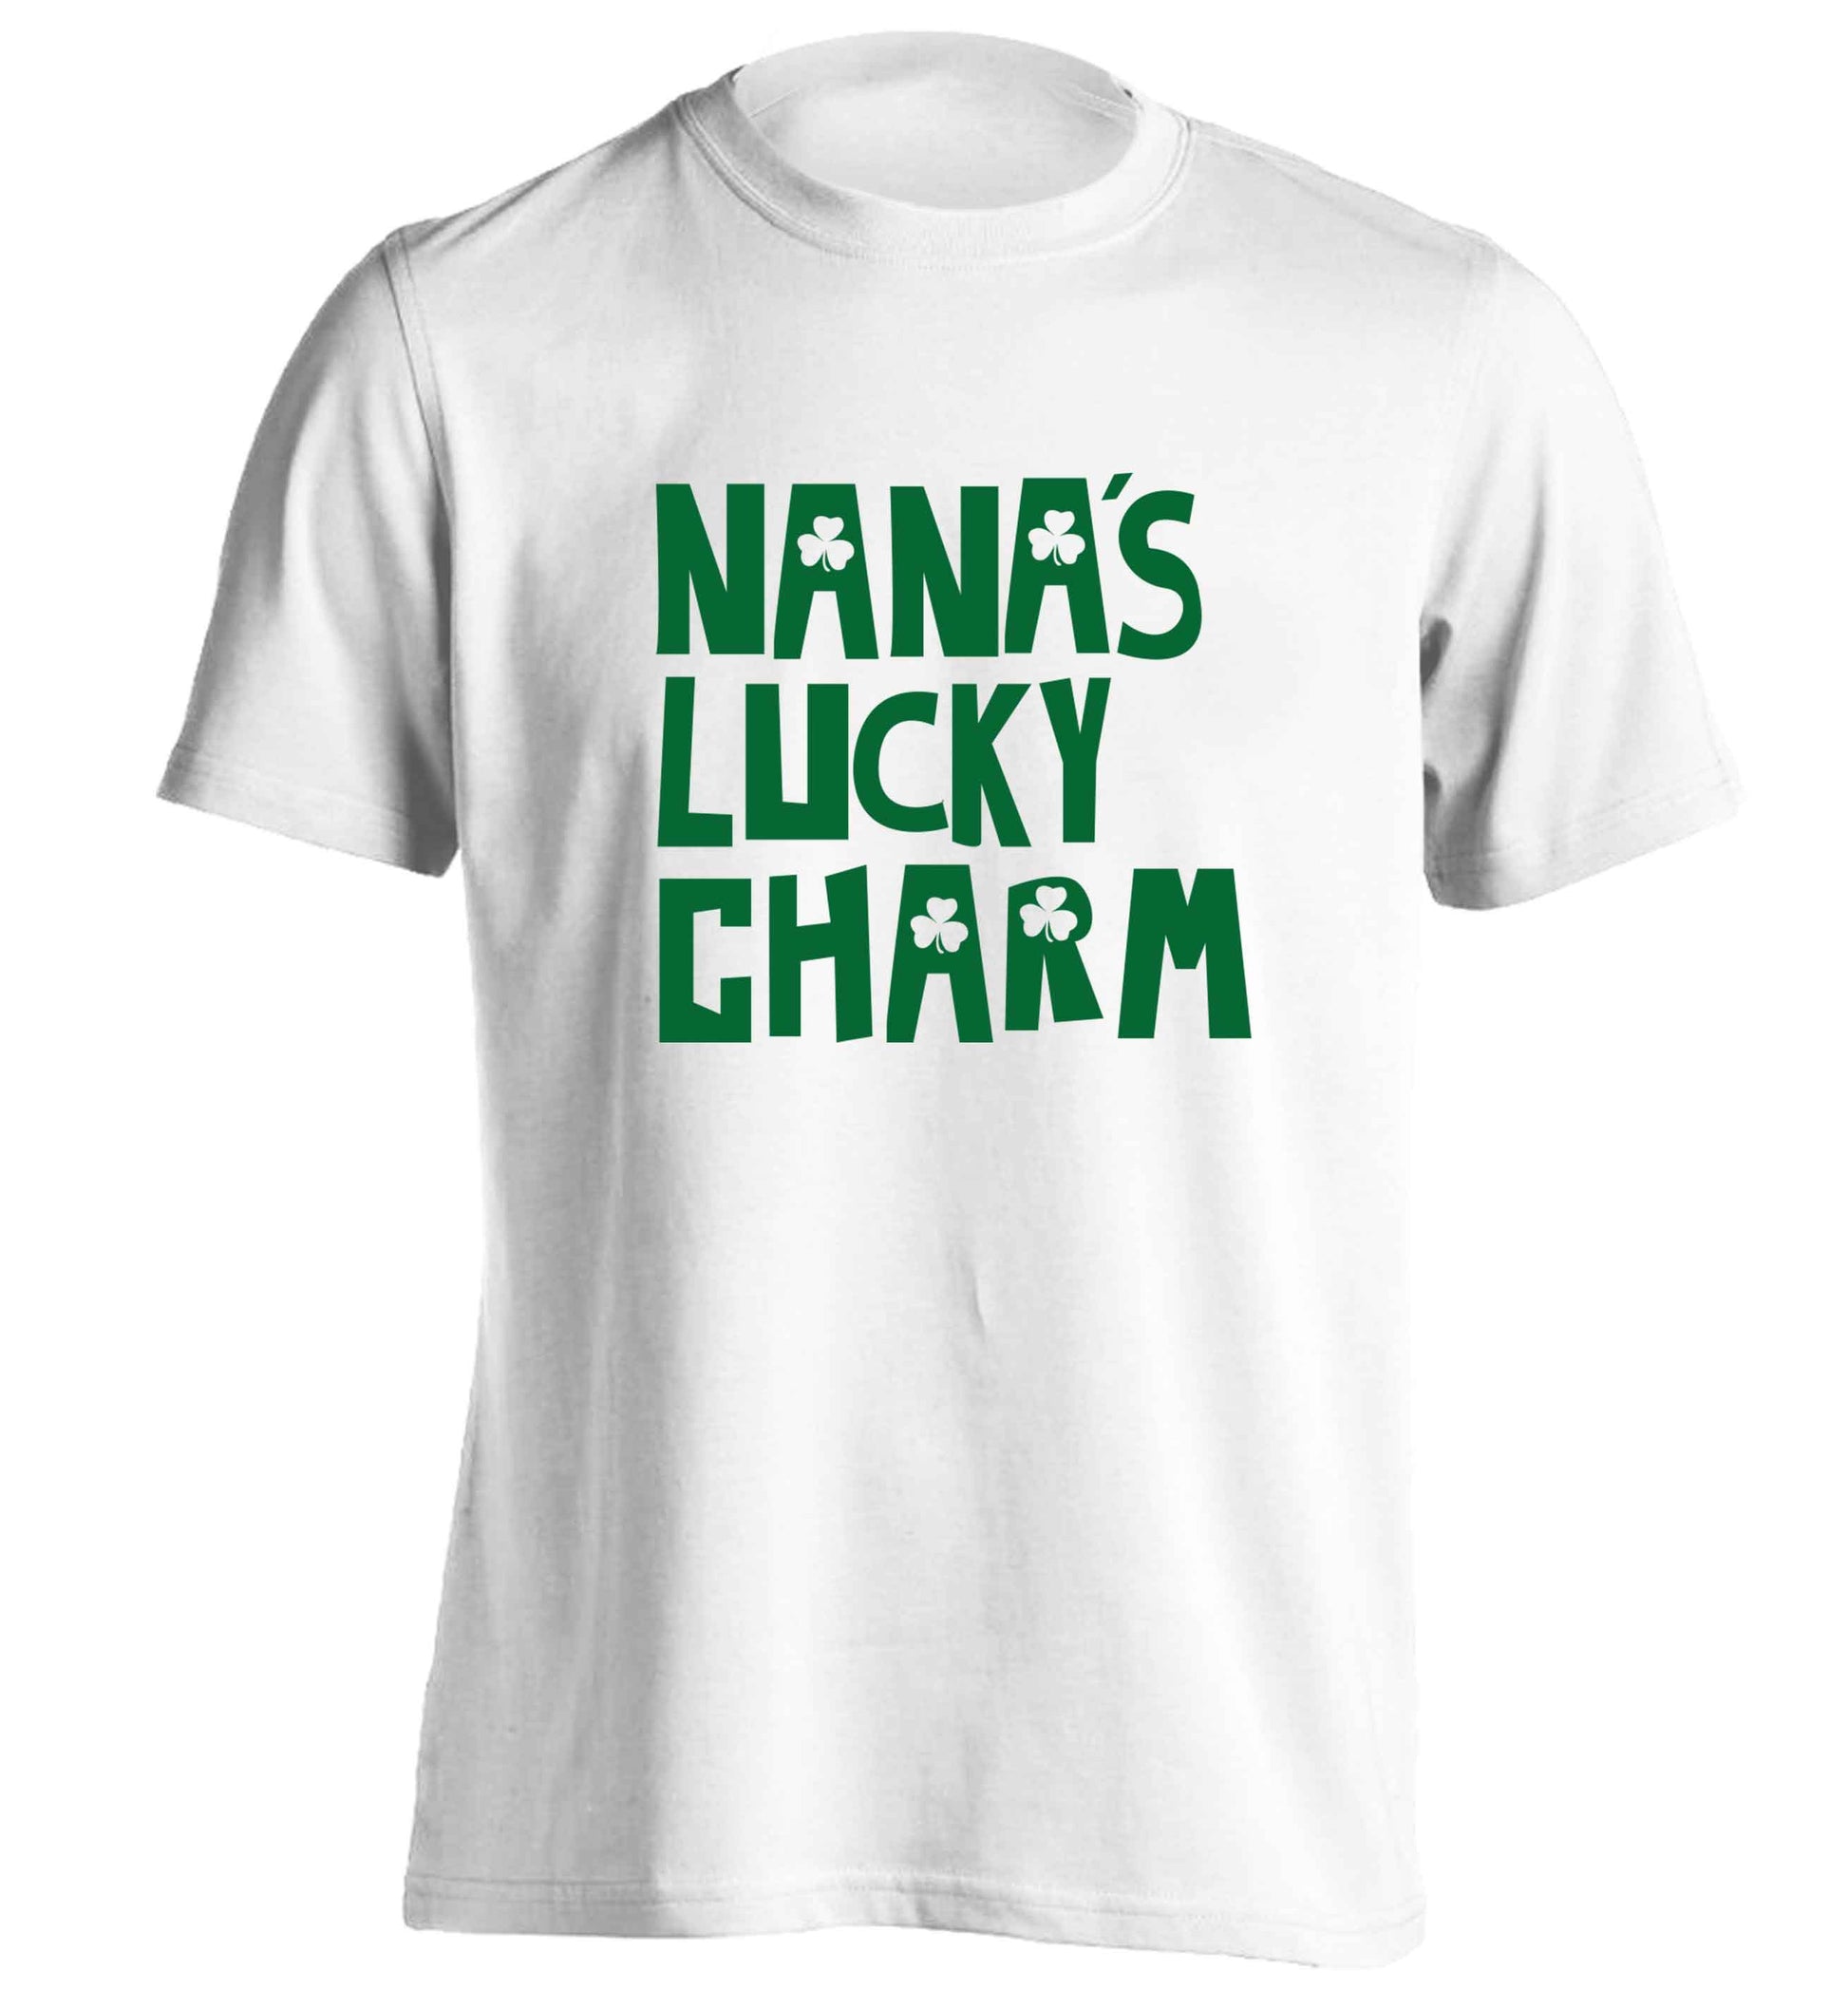 Nana's lucky charm adults unisex white Tshirt 2XL